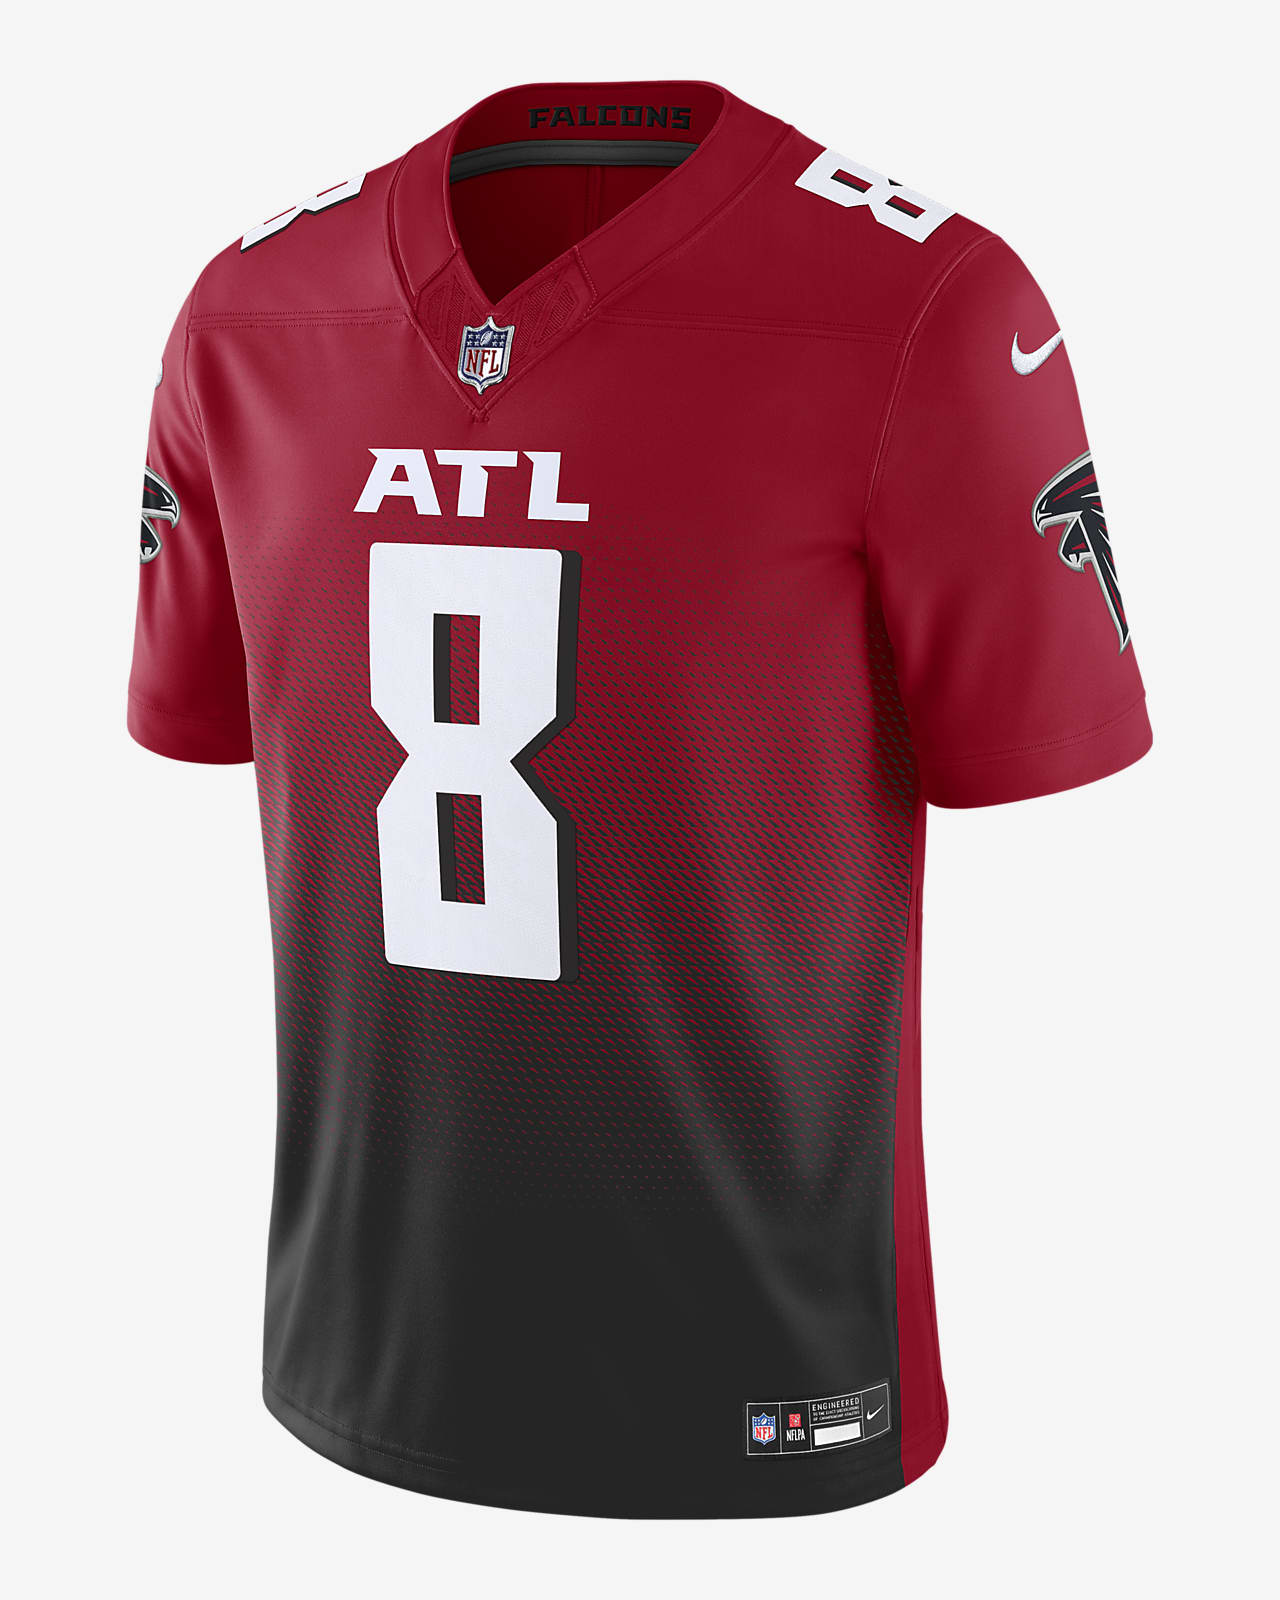 Kyle Pitts Atlanta Falcons Men's Nike Dri-FIT NFL Limited Football Jersey